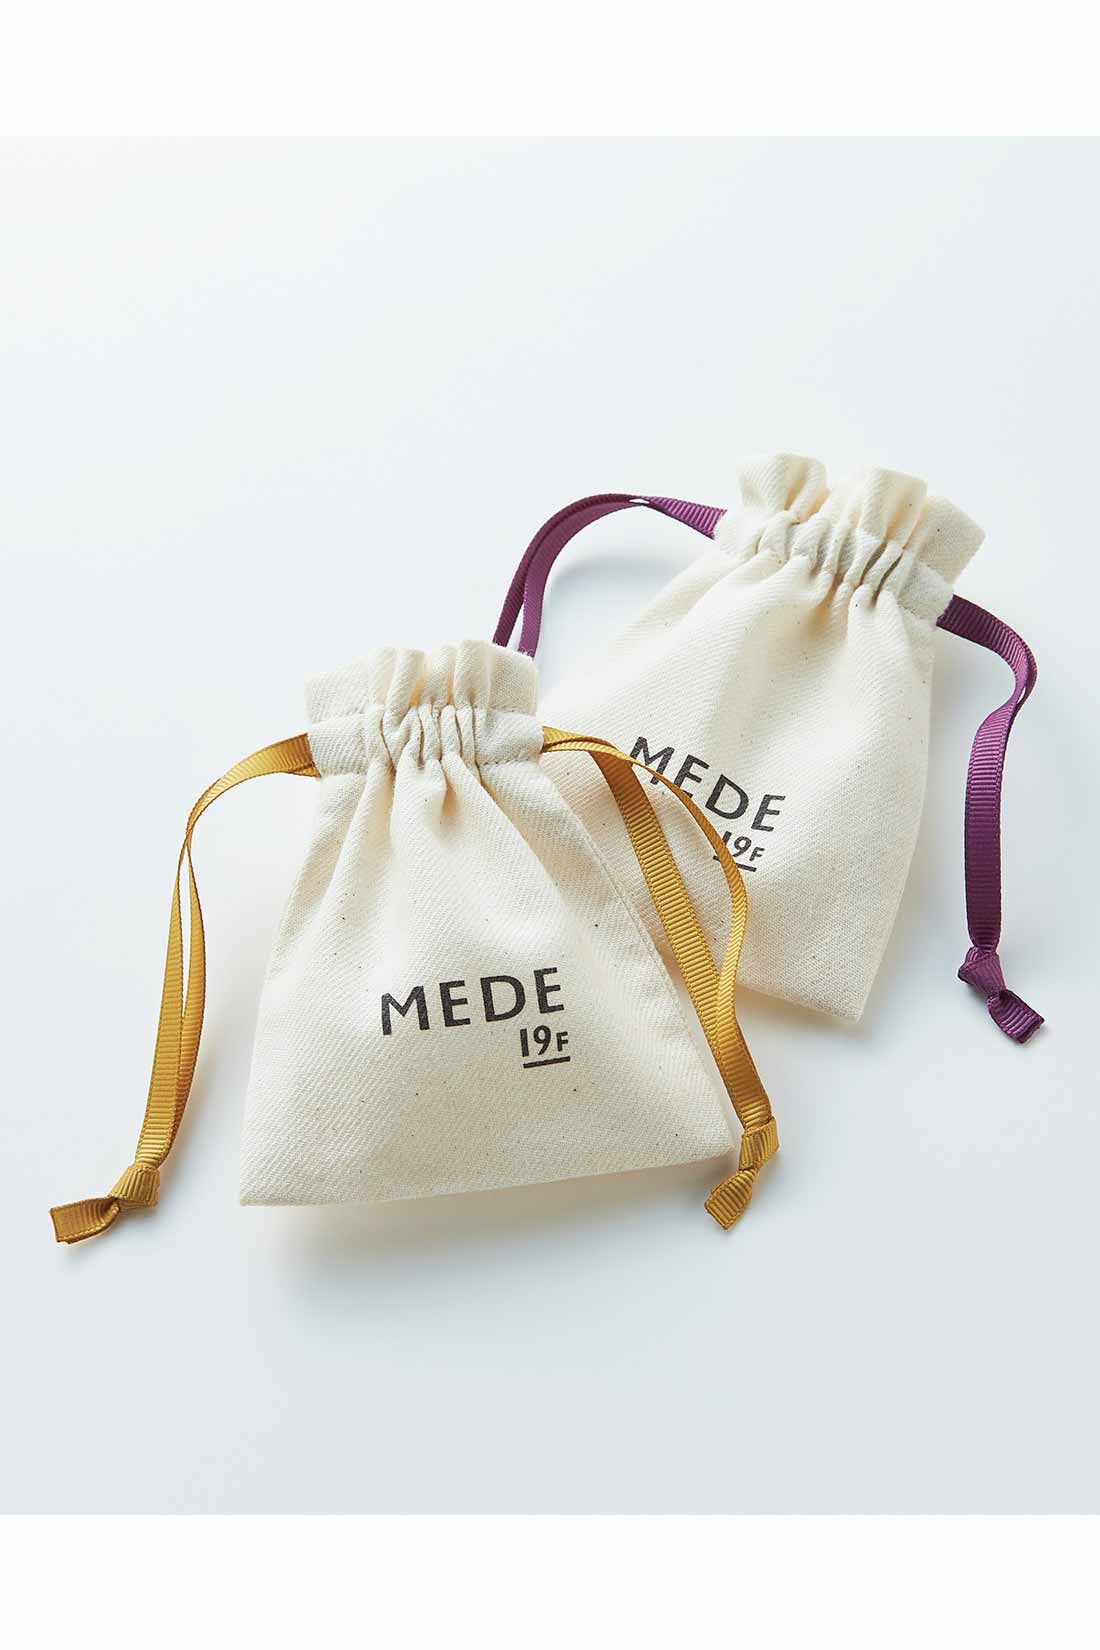 MEDE19F|YPAC for MEDE19F　フランス製陶器ボタンイヤリング type.16|MEDE19Fオリジナルきんちゃくに入れてお届けします。